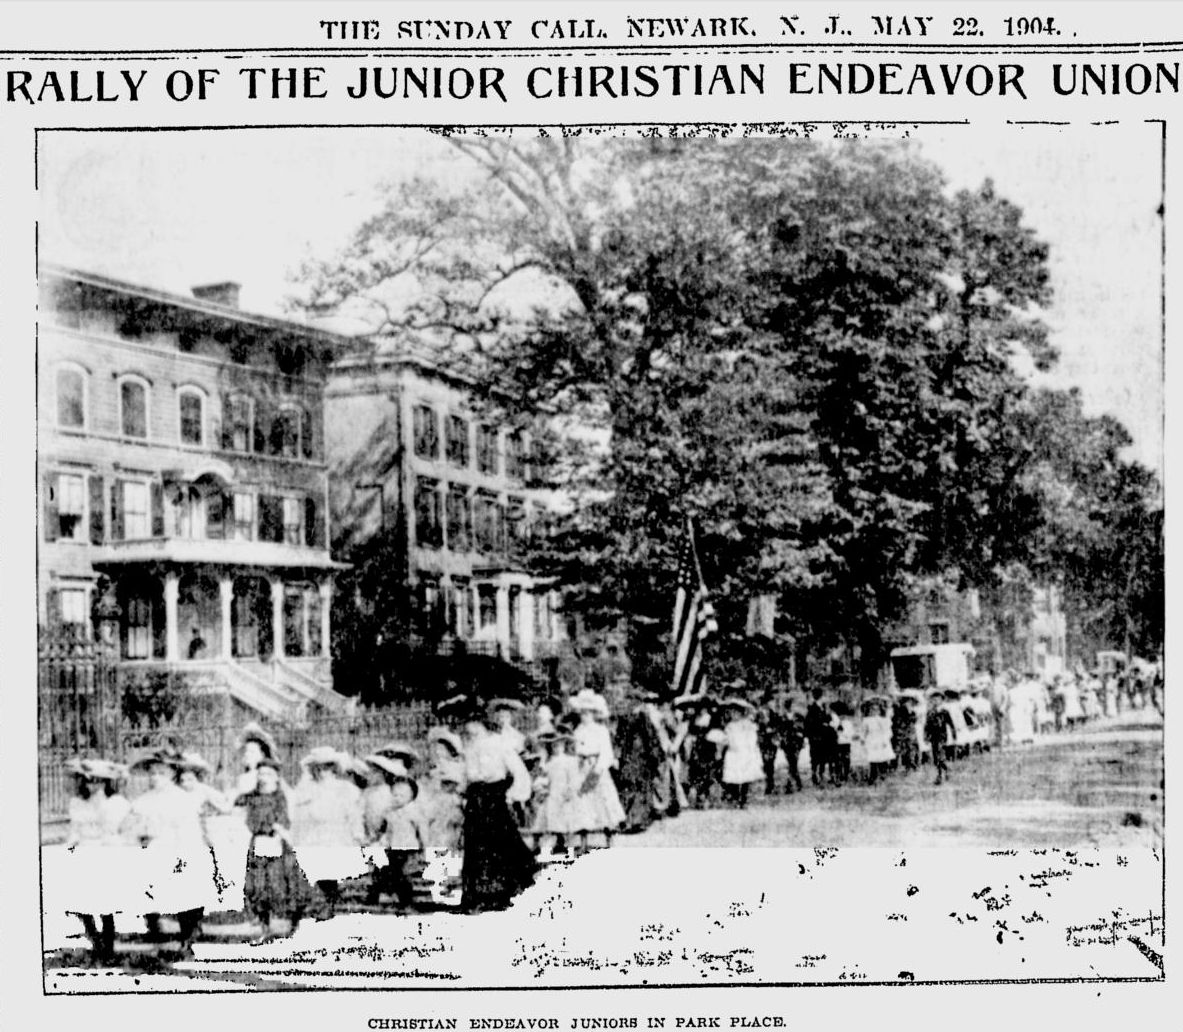 Christian Endeavor Juniors 
May 22, 1904
